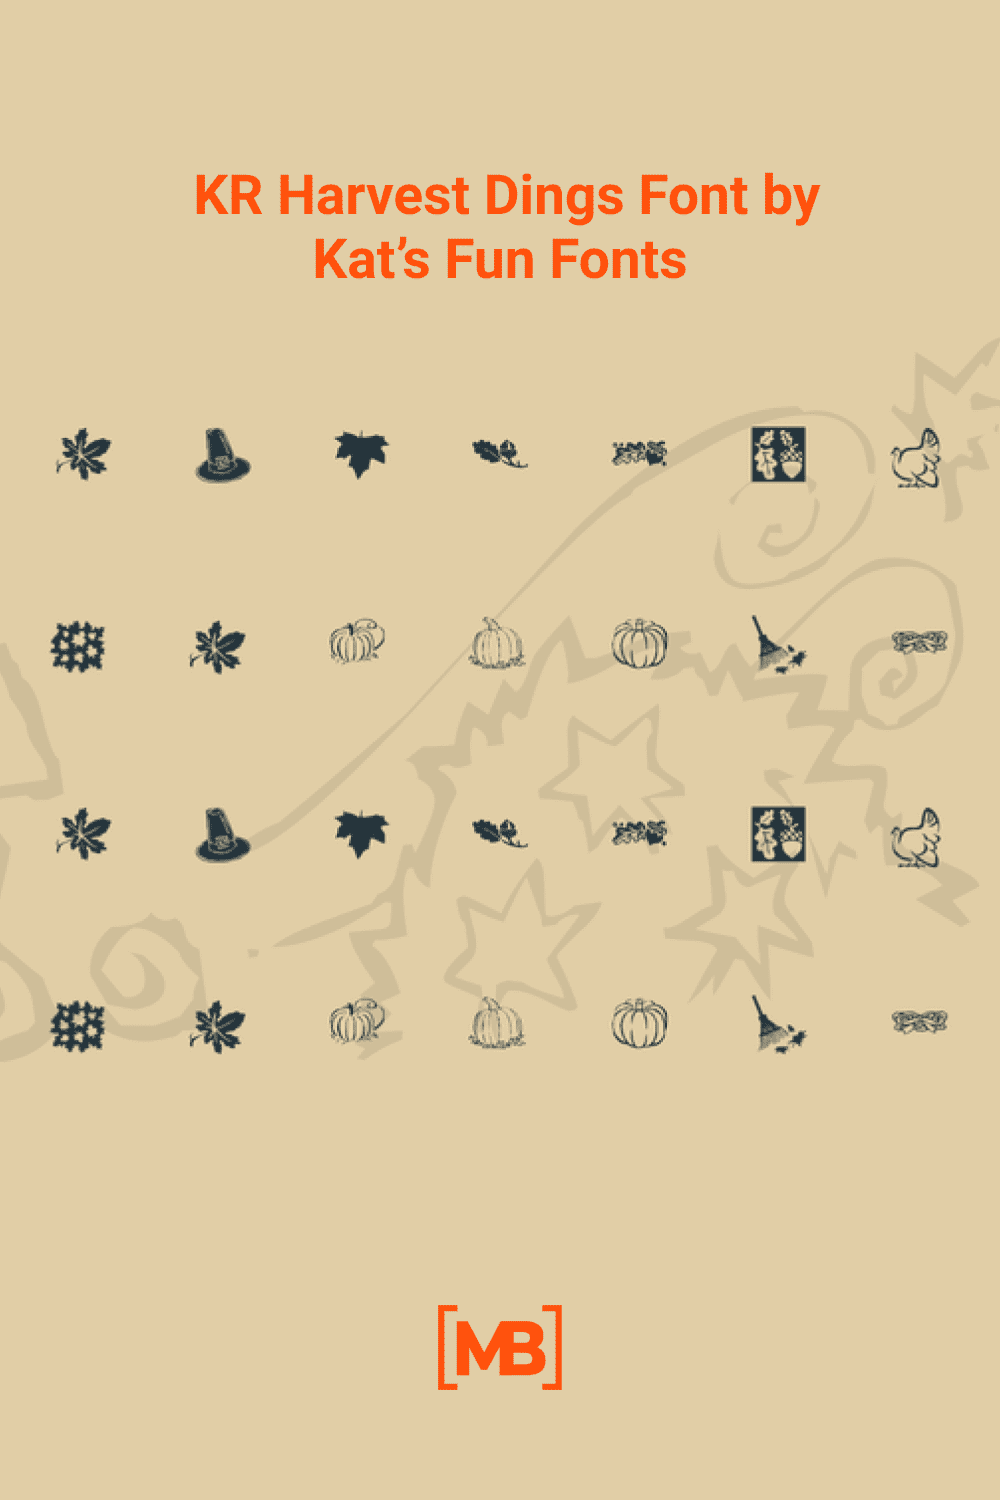 KR harvest dings font by Kat's Fun Fonts.